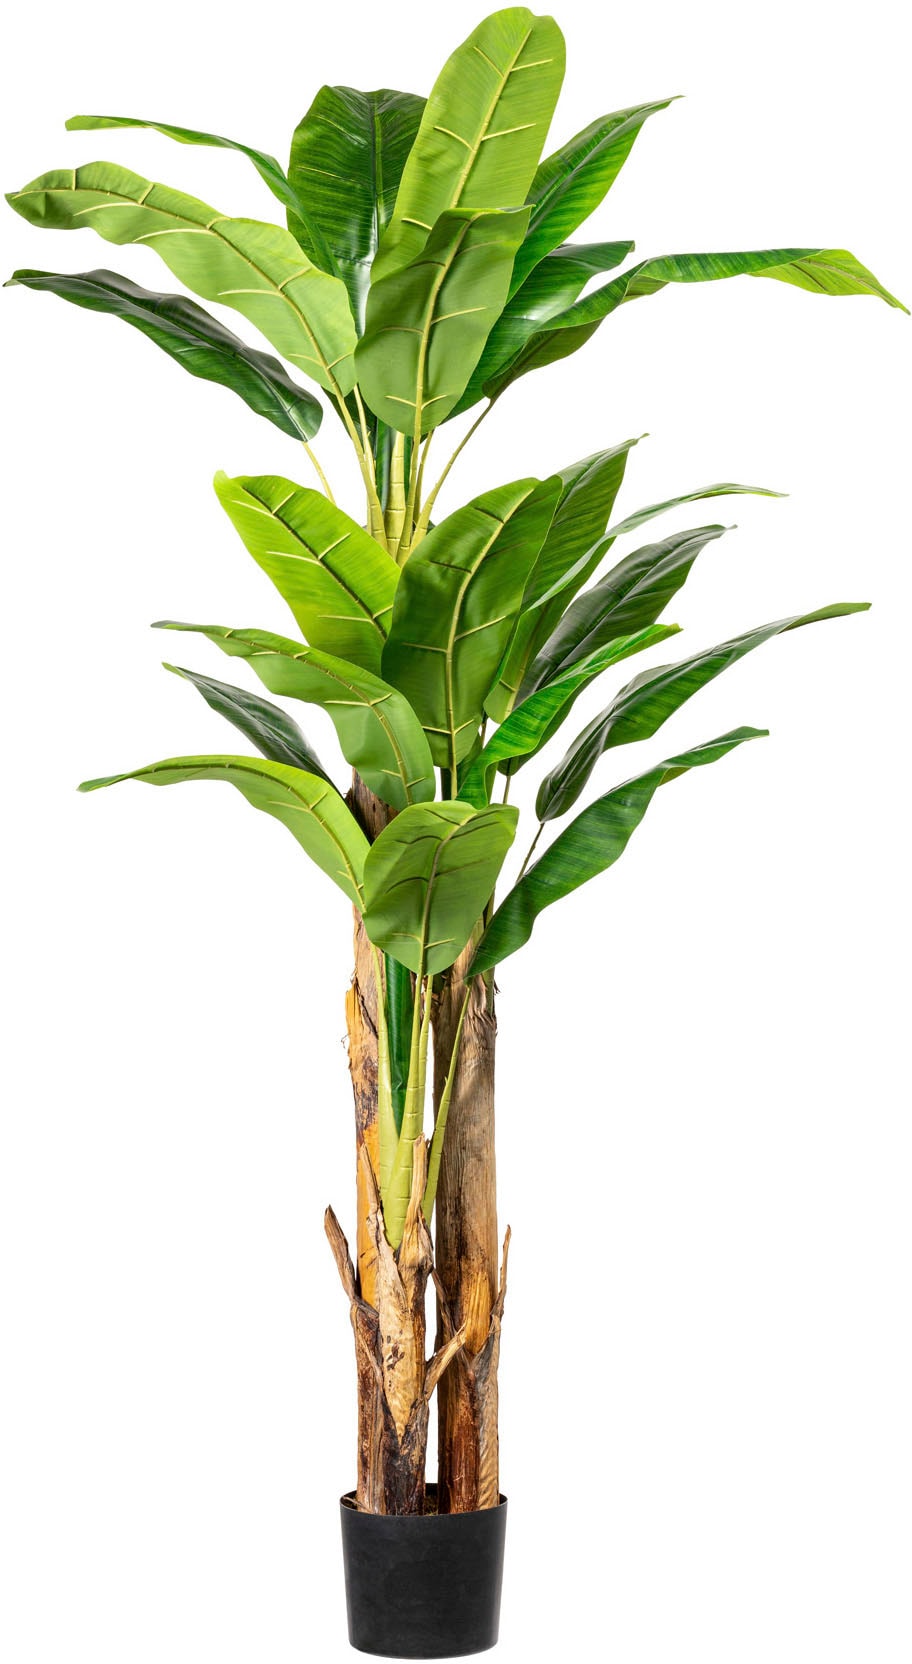 Creativ green Kunstpalme »Bananenpflanze« bequem kaufen